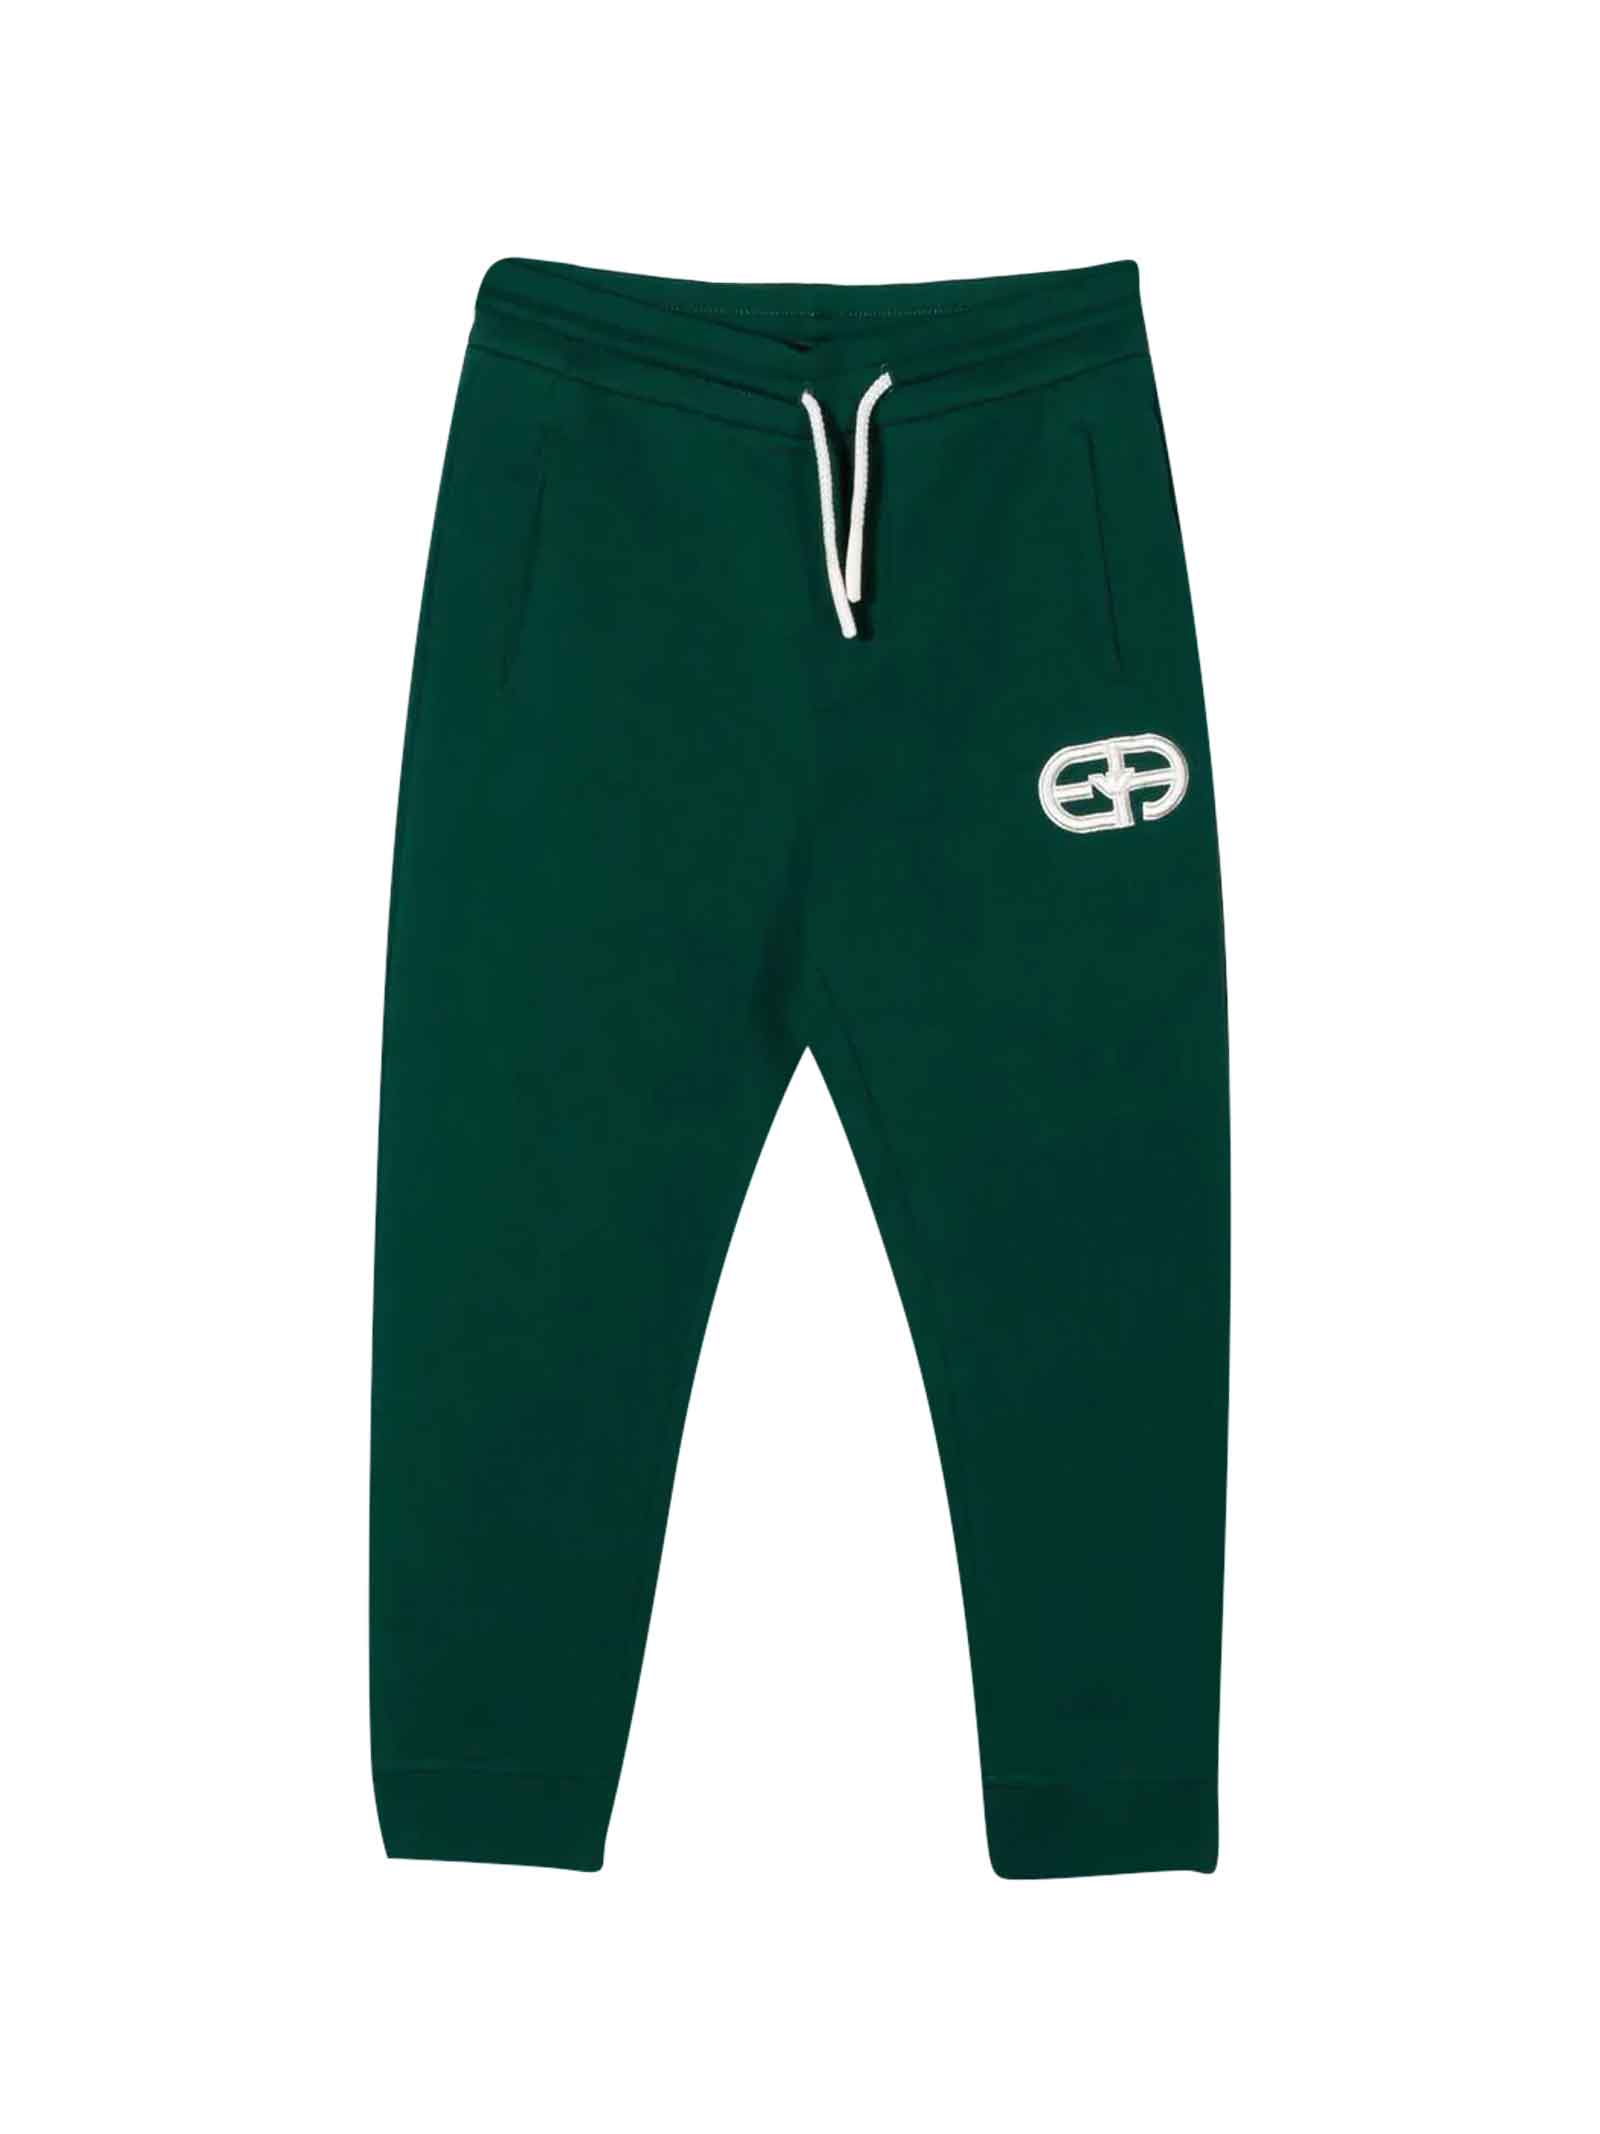 Emporio Armani Green Trousers Boy